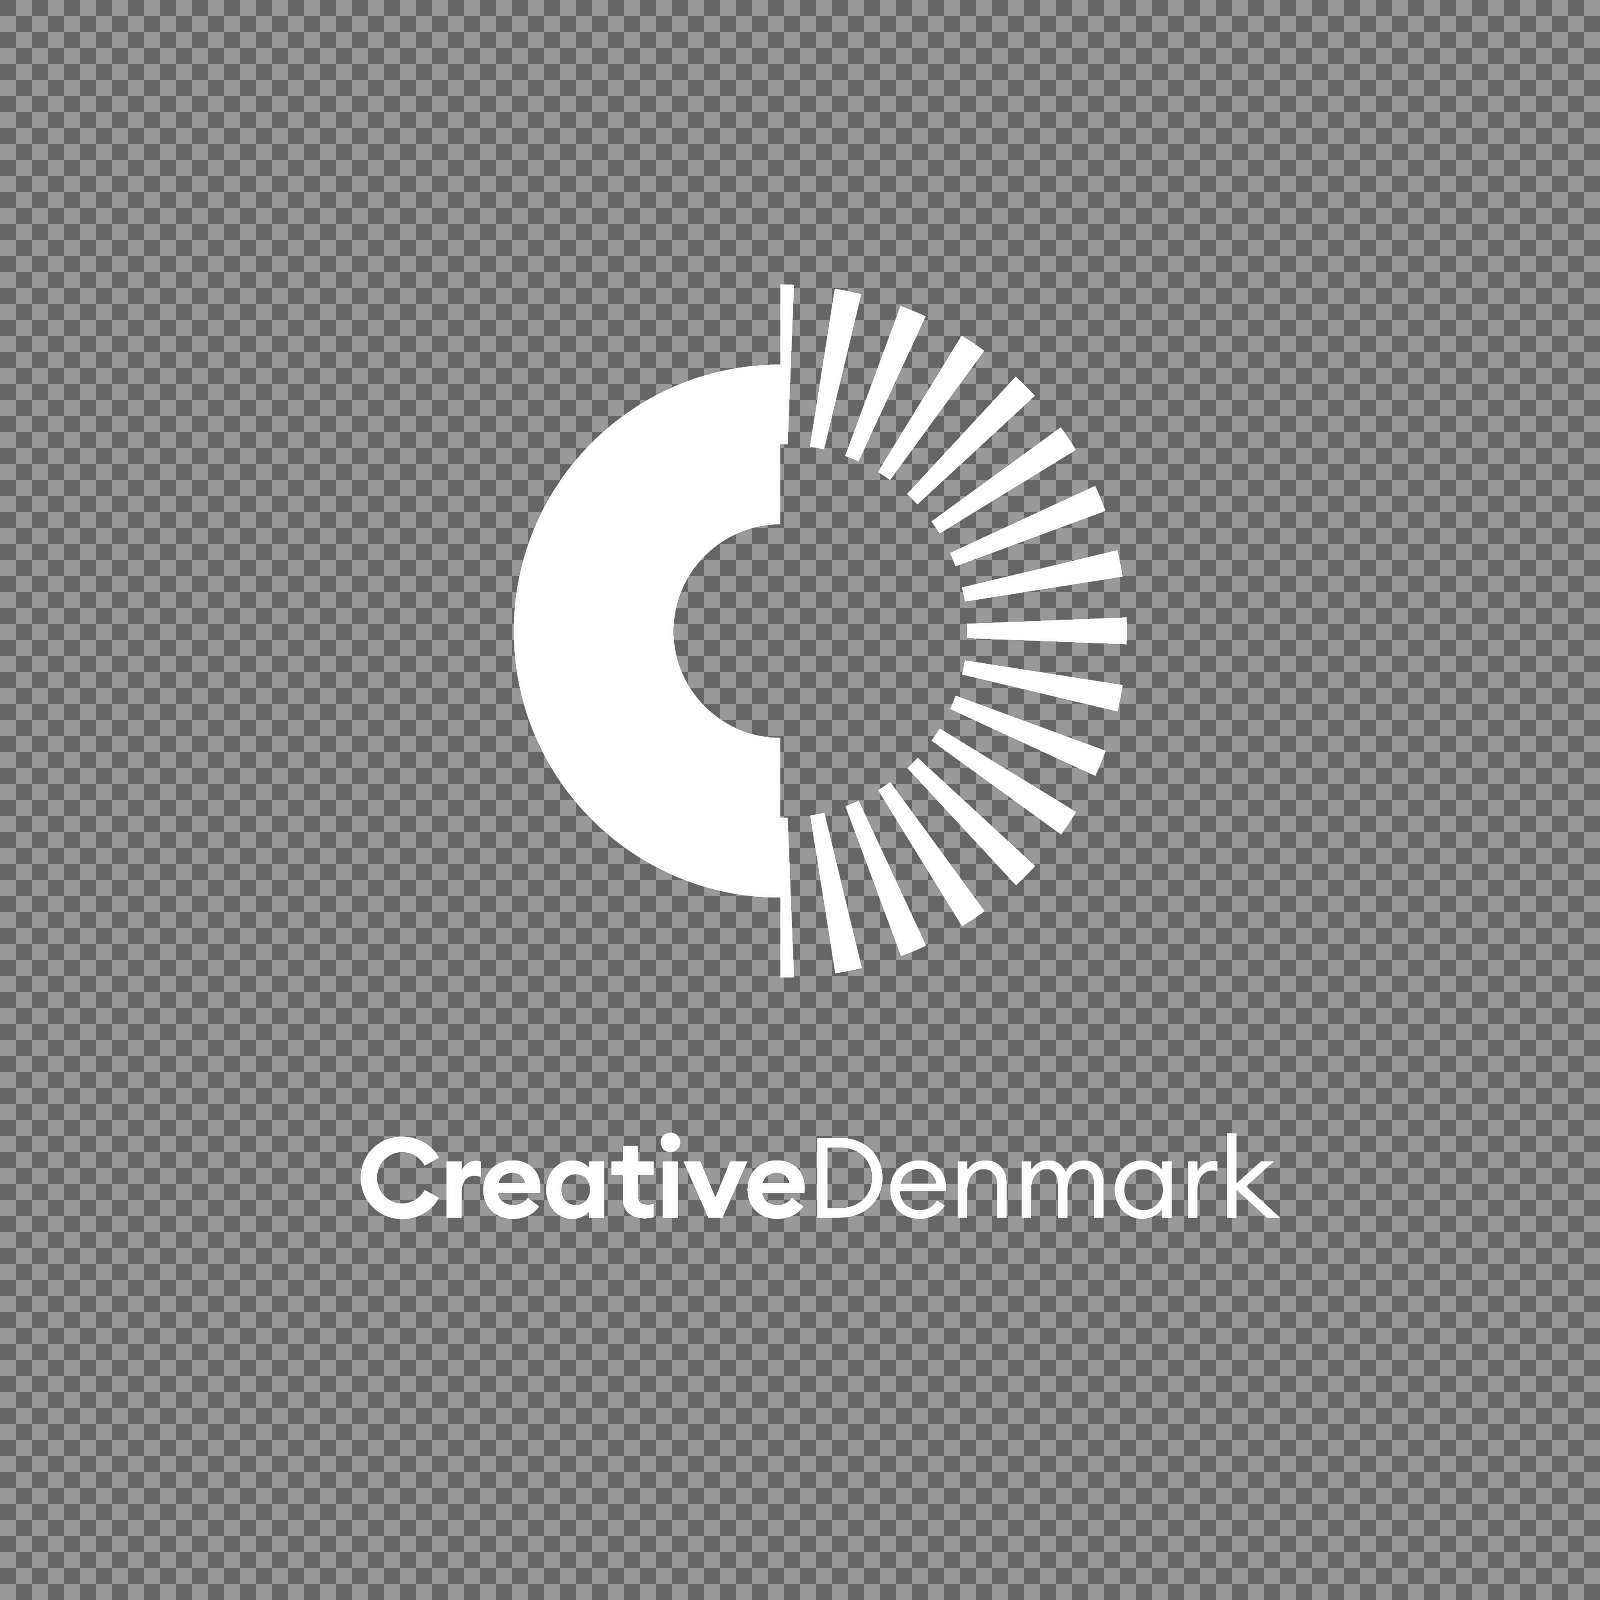 Creative Denmark logo_centred_white.png